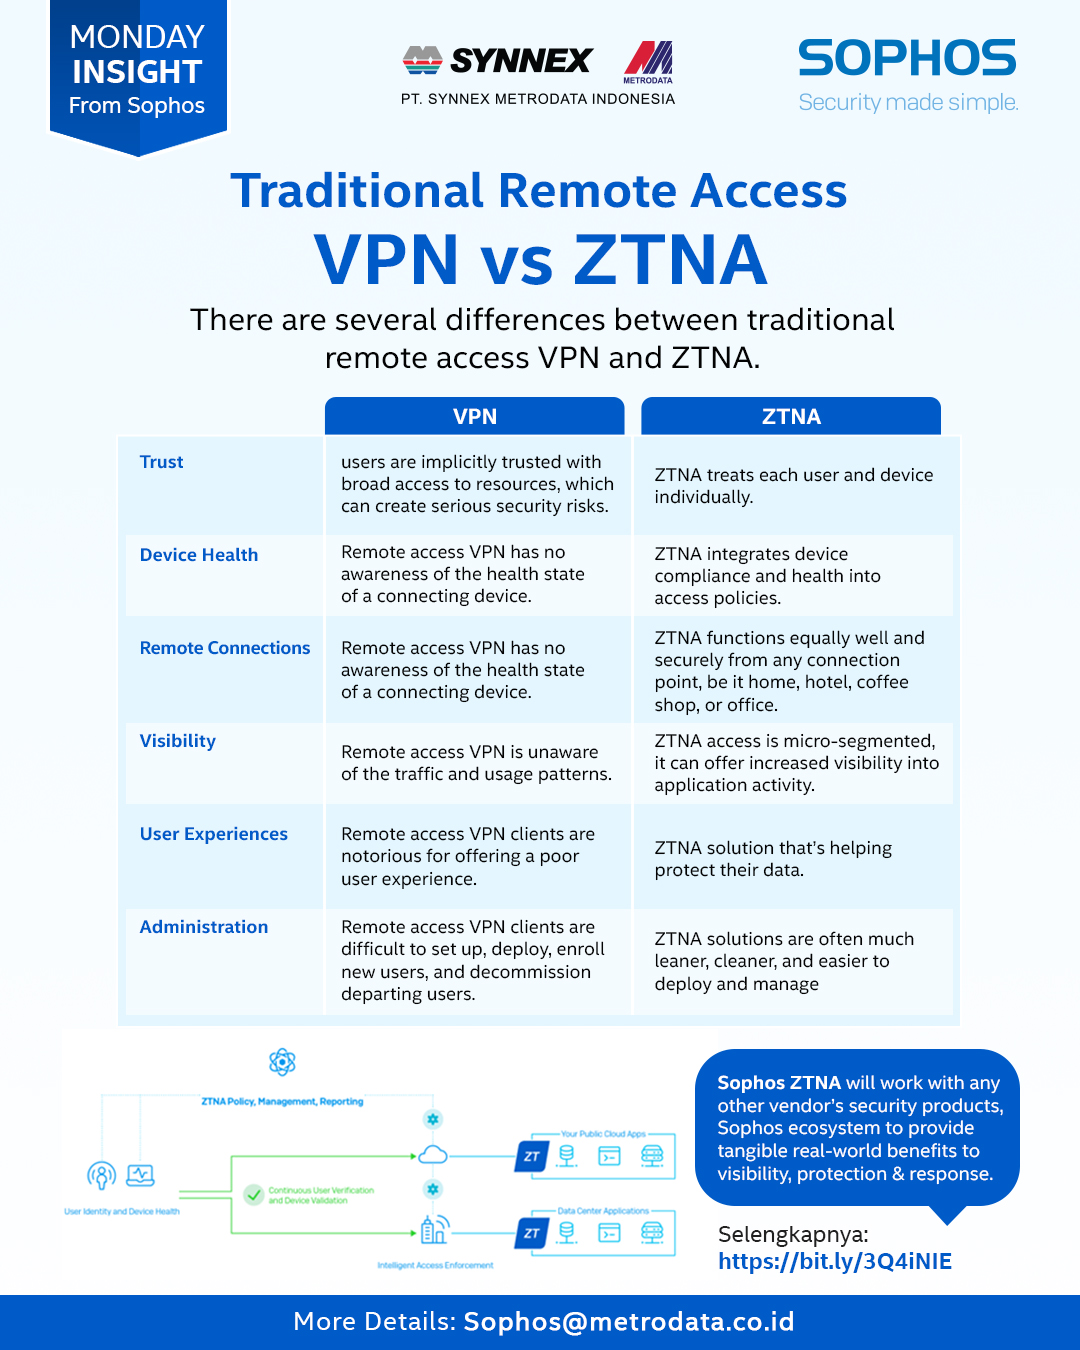 https://www.synnexmetrodata.com/wp-content/uploads/2022/06/Sophos-Monday-Insight-Traditional-Remote-Access-VPN-vs-ZTNA.jpg